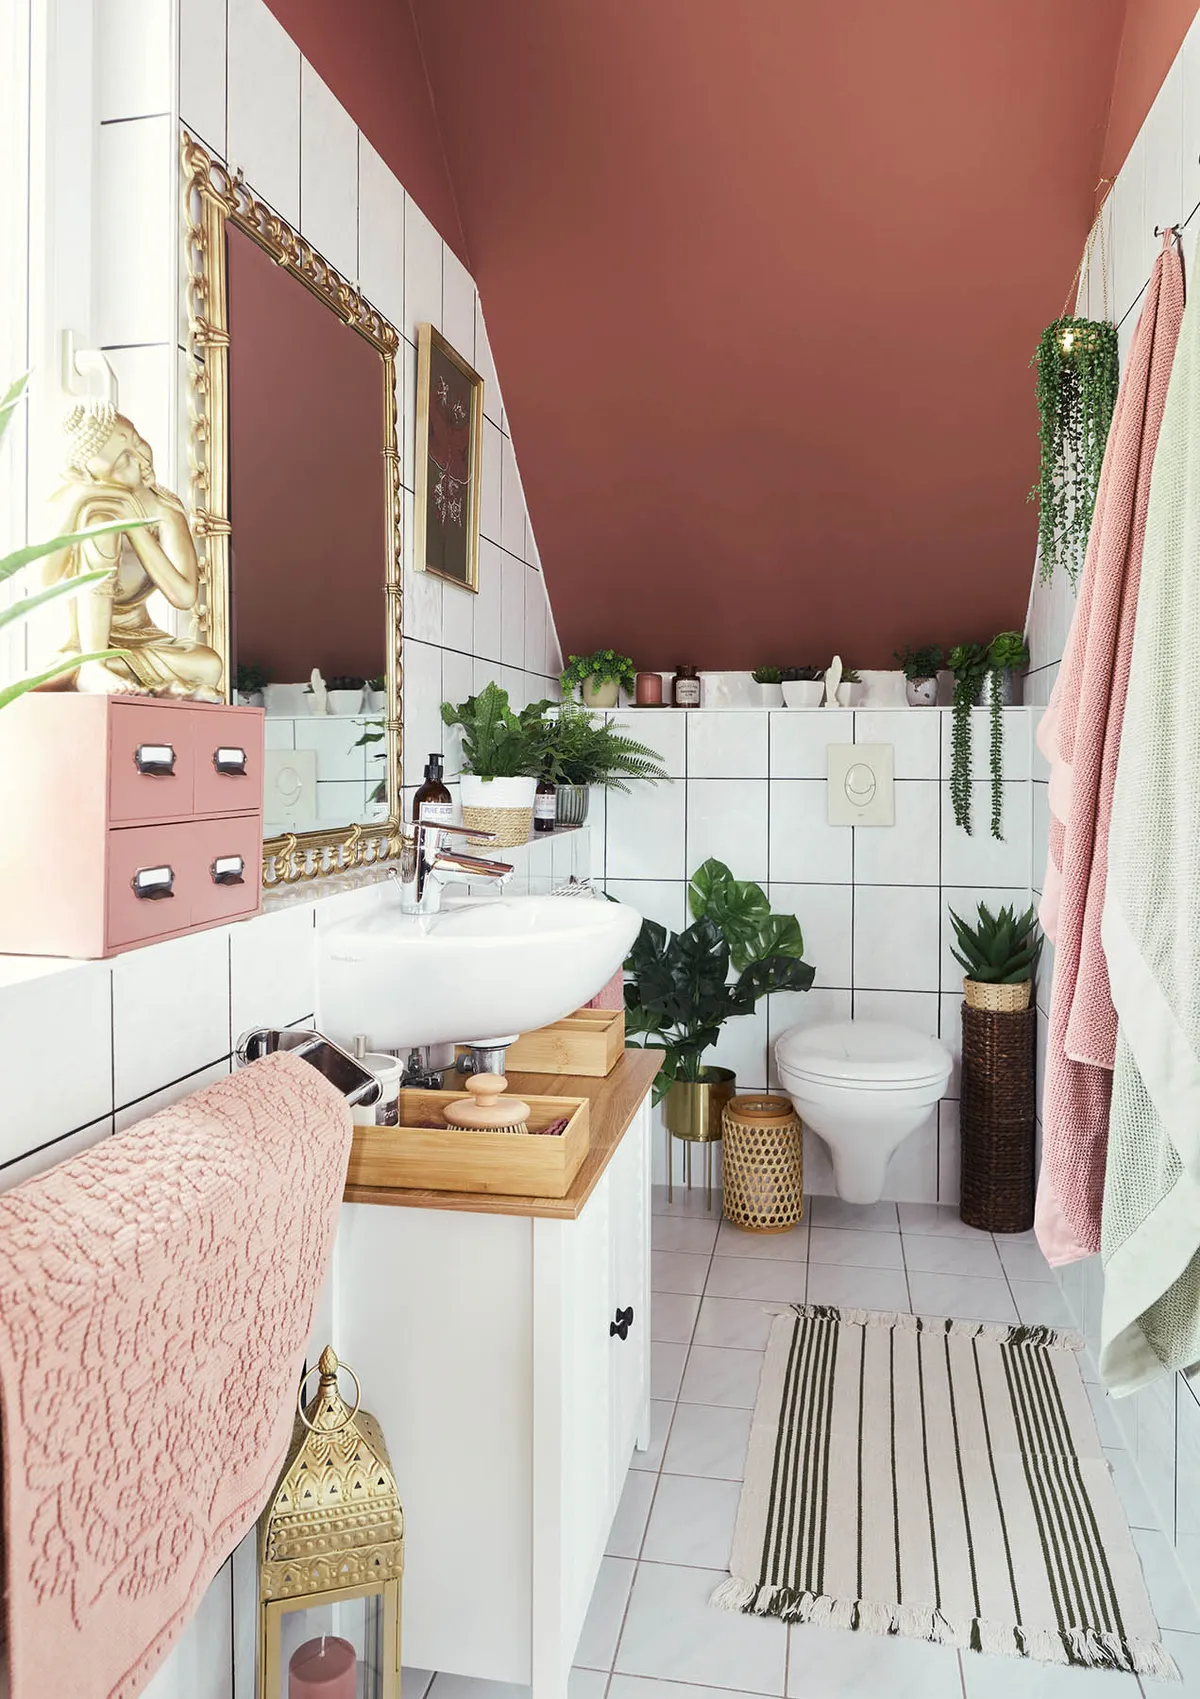 En suite bathroom,slited ceiling,rug,tiling,sink.mirror,storage,open shelving,plants